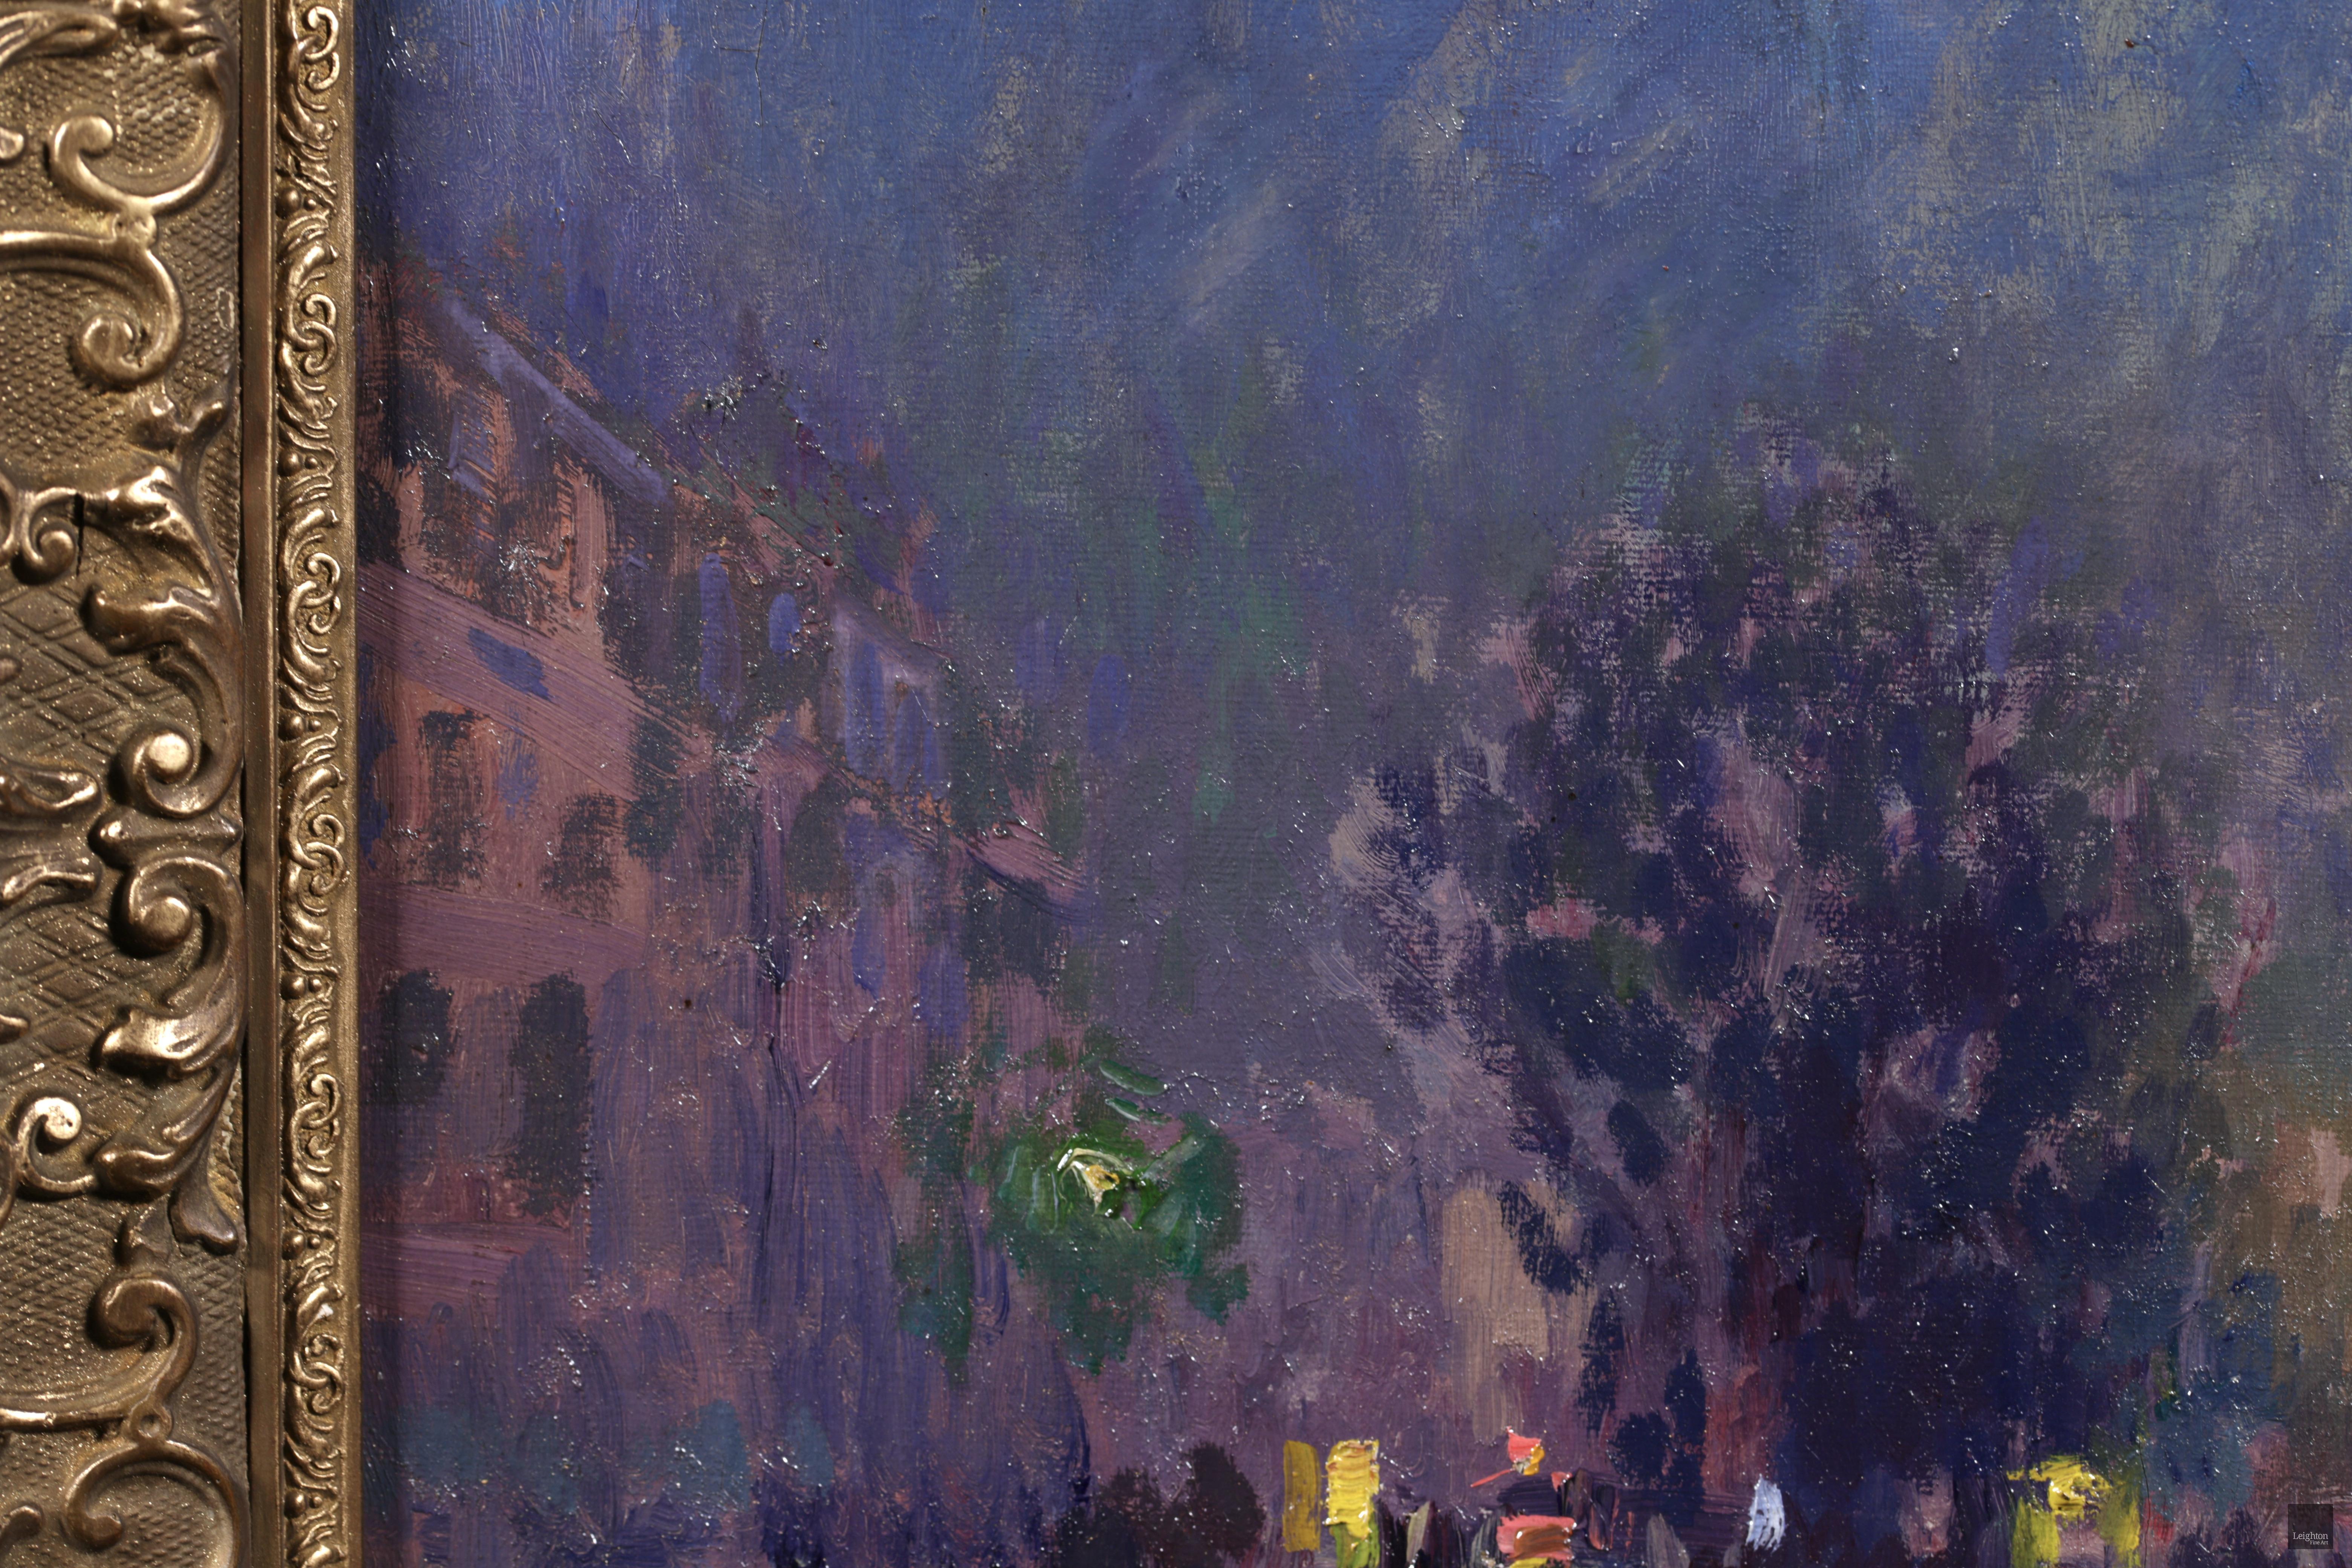 Moonlight - Paris - Post Impressionist Oil, Night Landscape by Elie Pavil - Post-Impressionist Painting by Elie Anatole Pavil